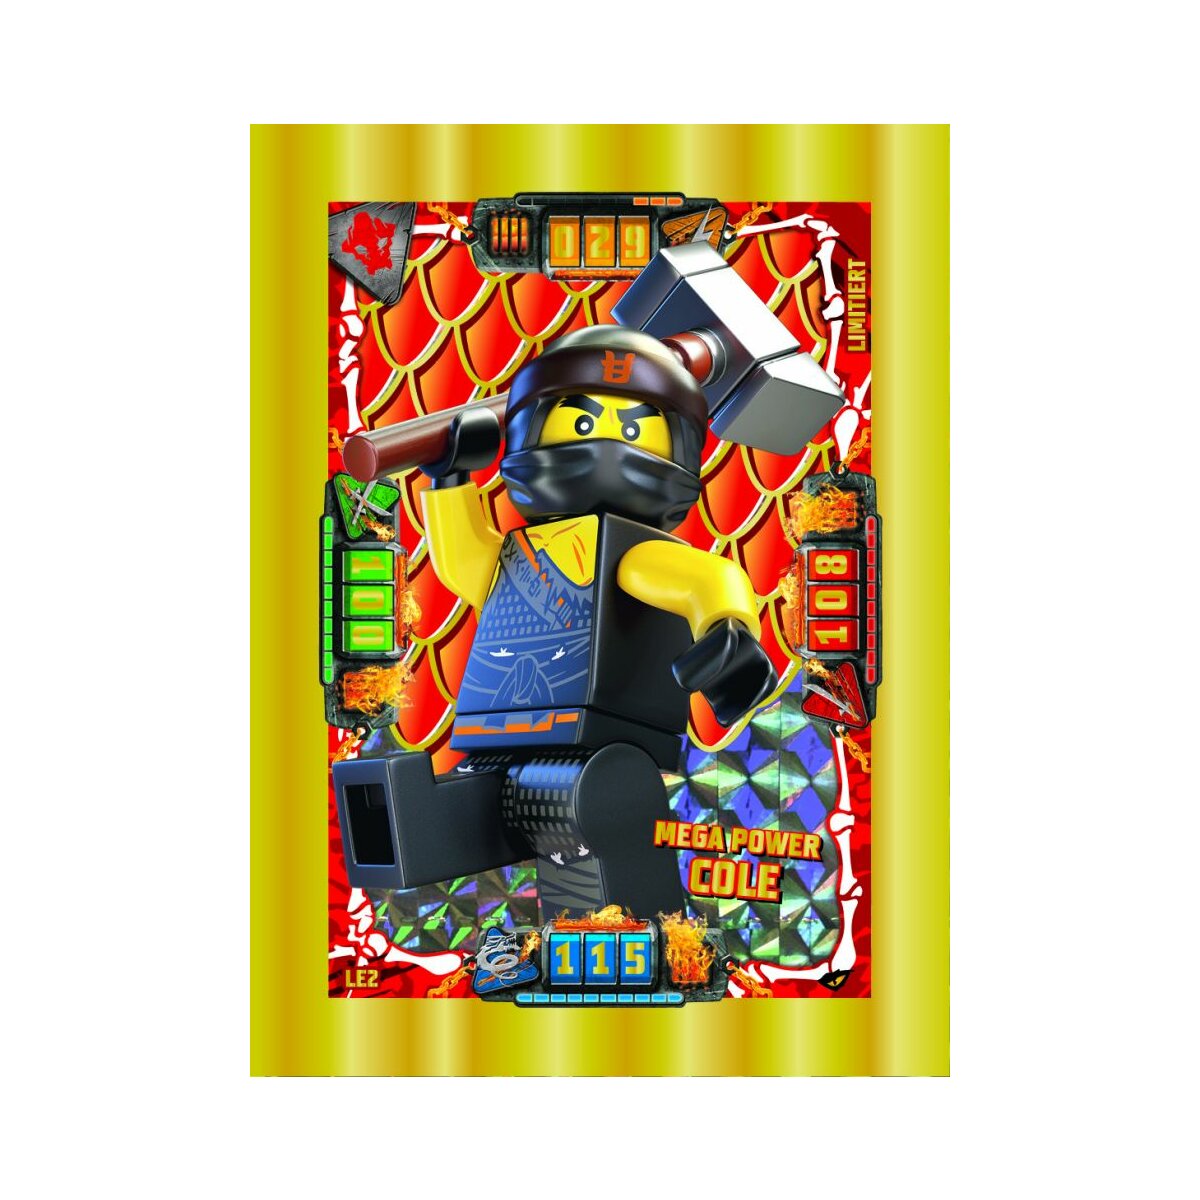 Lego Ninjago Serie 4 Trading Card limitierte Auflage LE8 Mega Power Ninja Team